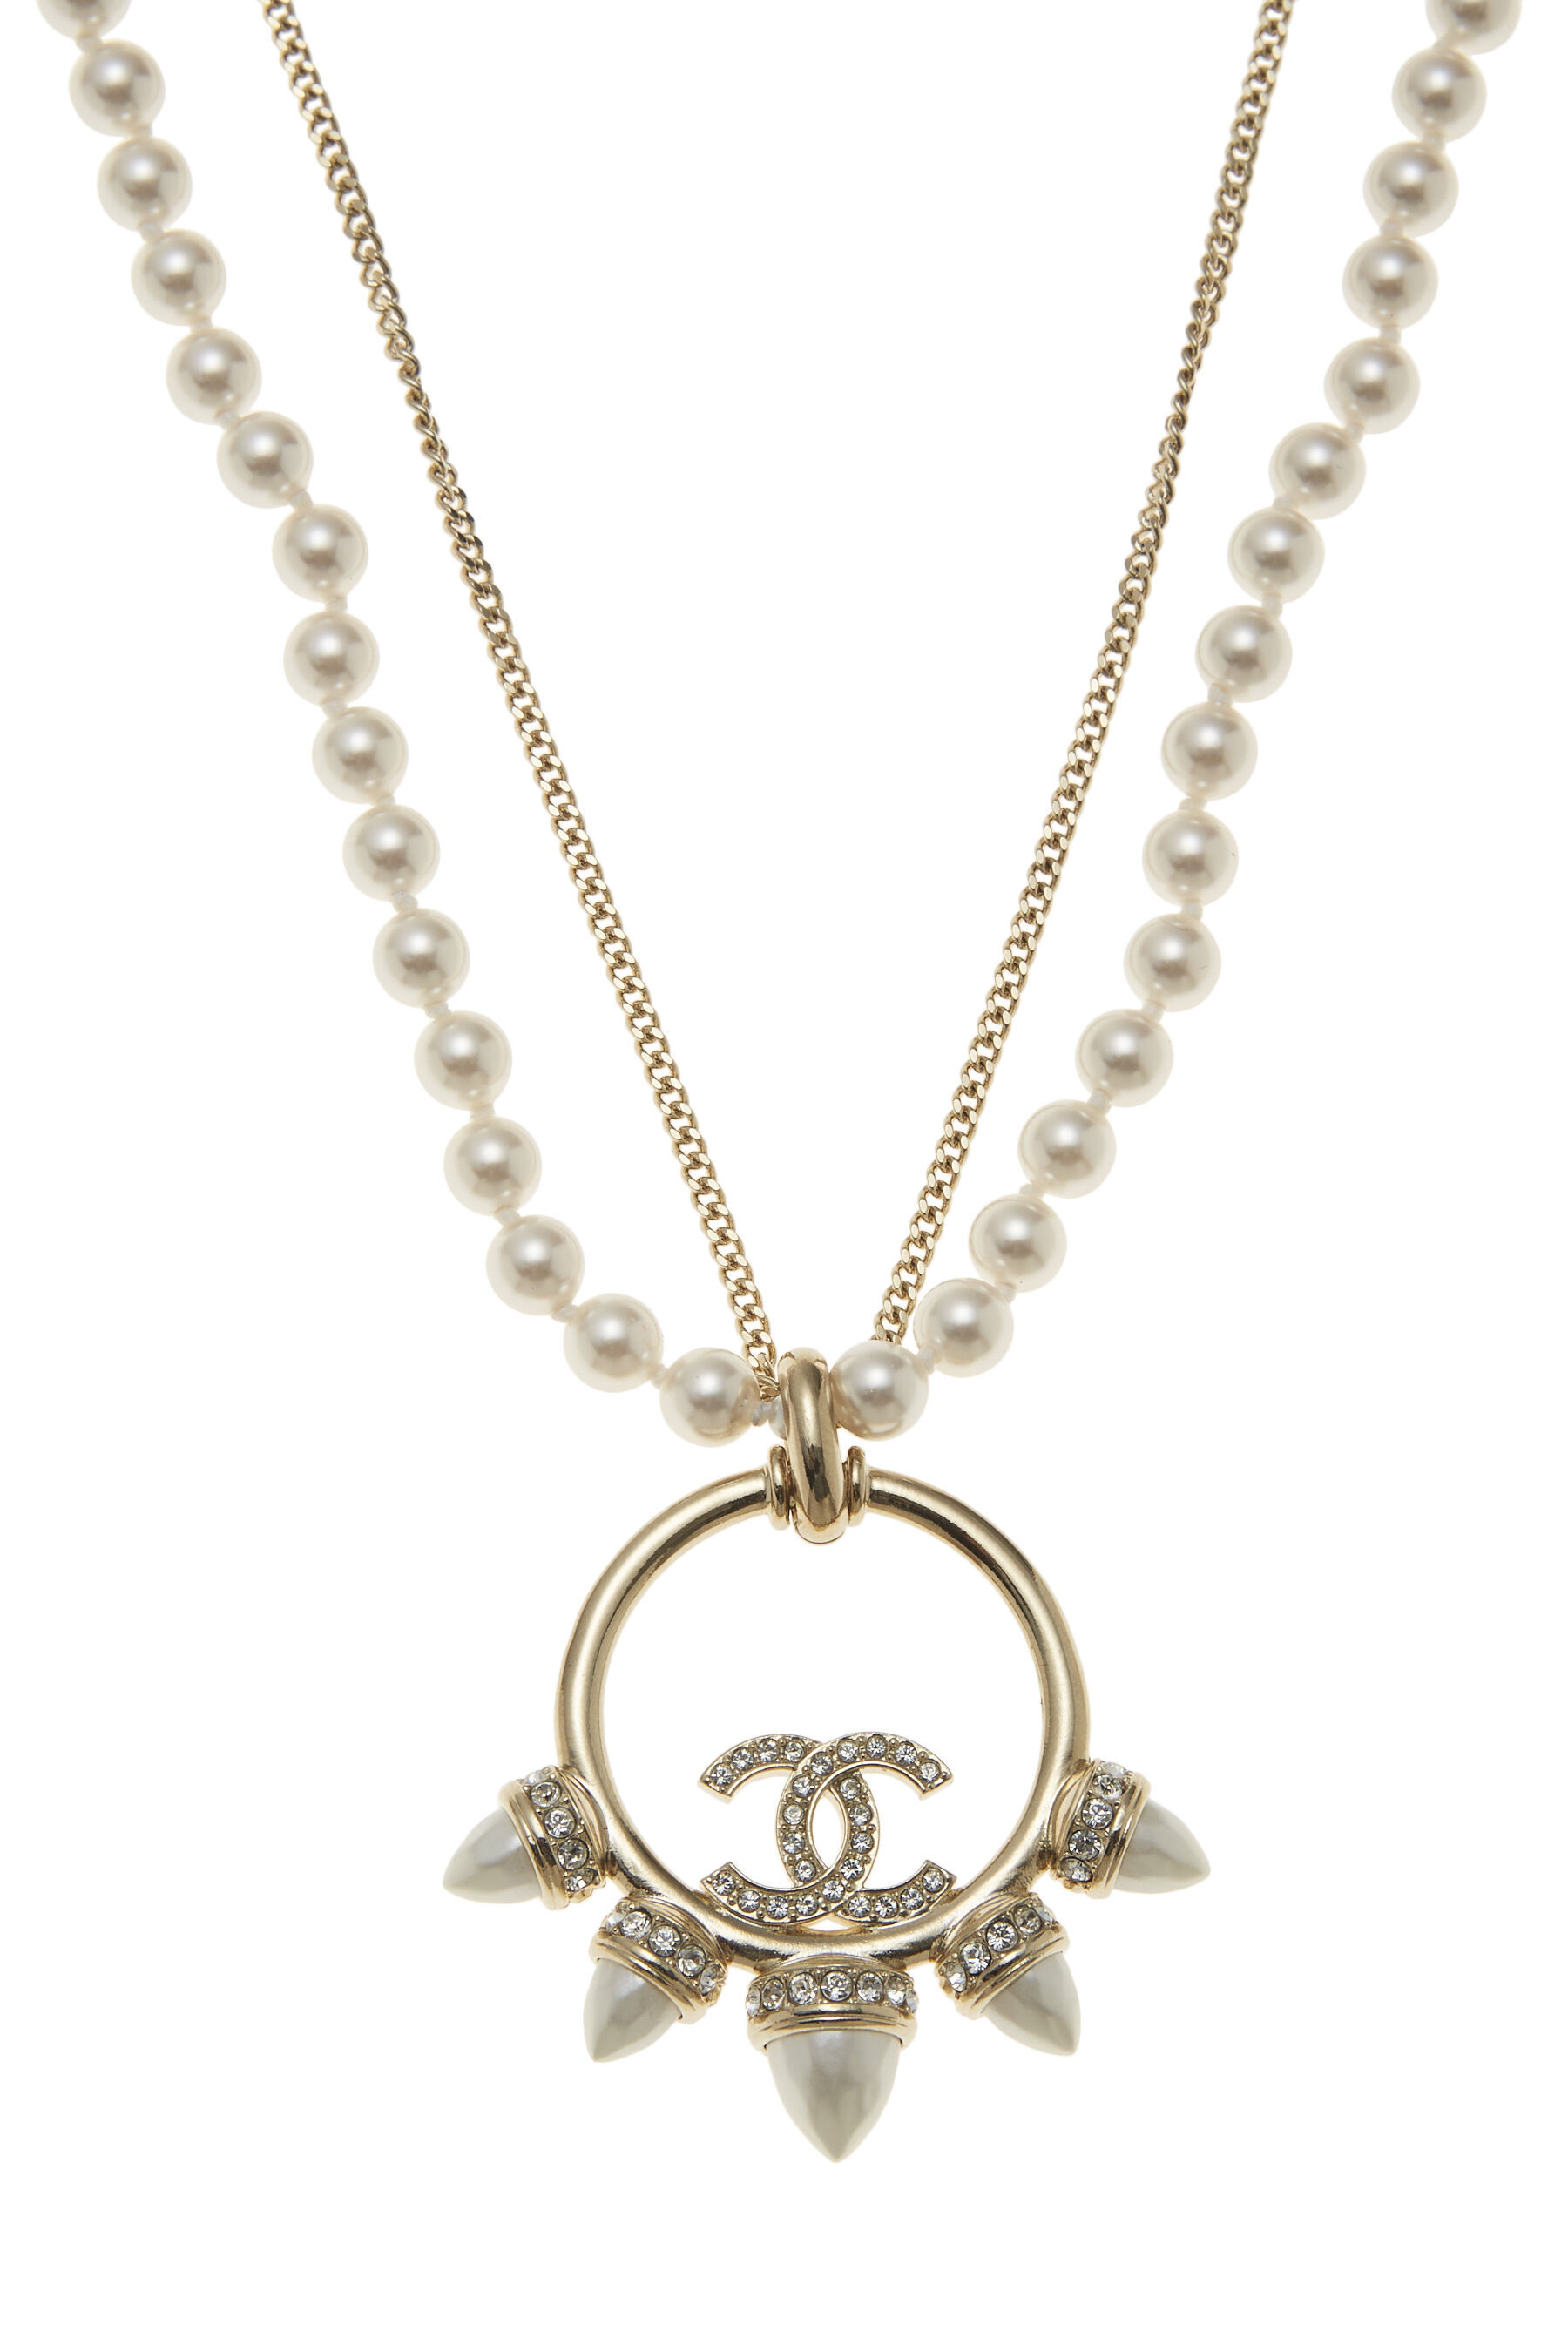 Classy Vintage Style Coco Chanel Inspired Layered Pearl Necklace   Жемчужное ожерелье Длинное ожерелье Ювелирные изделия